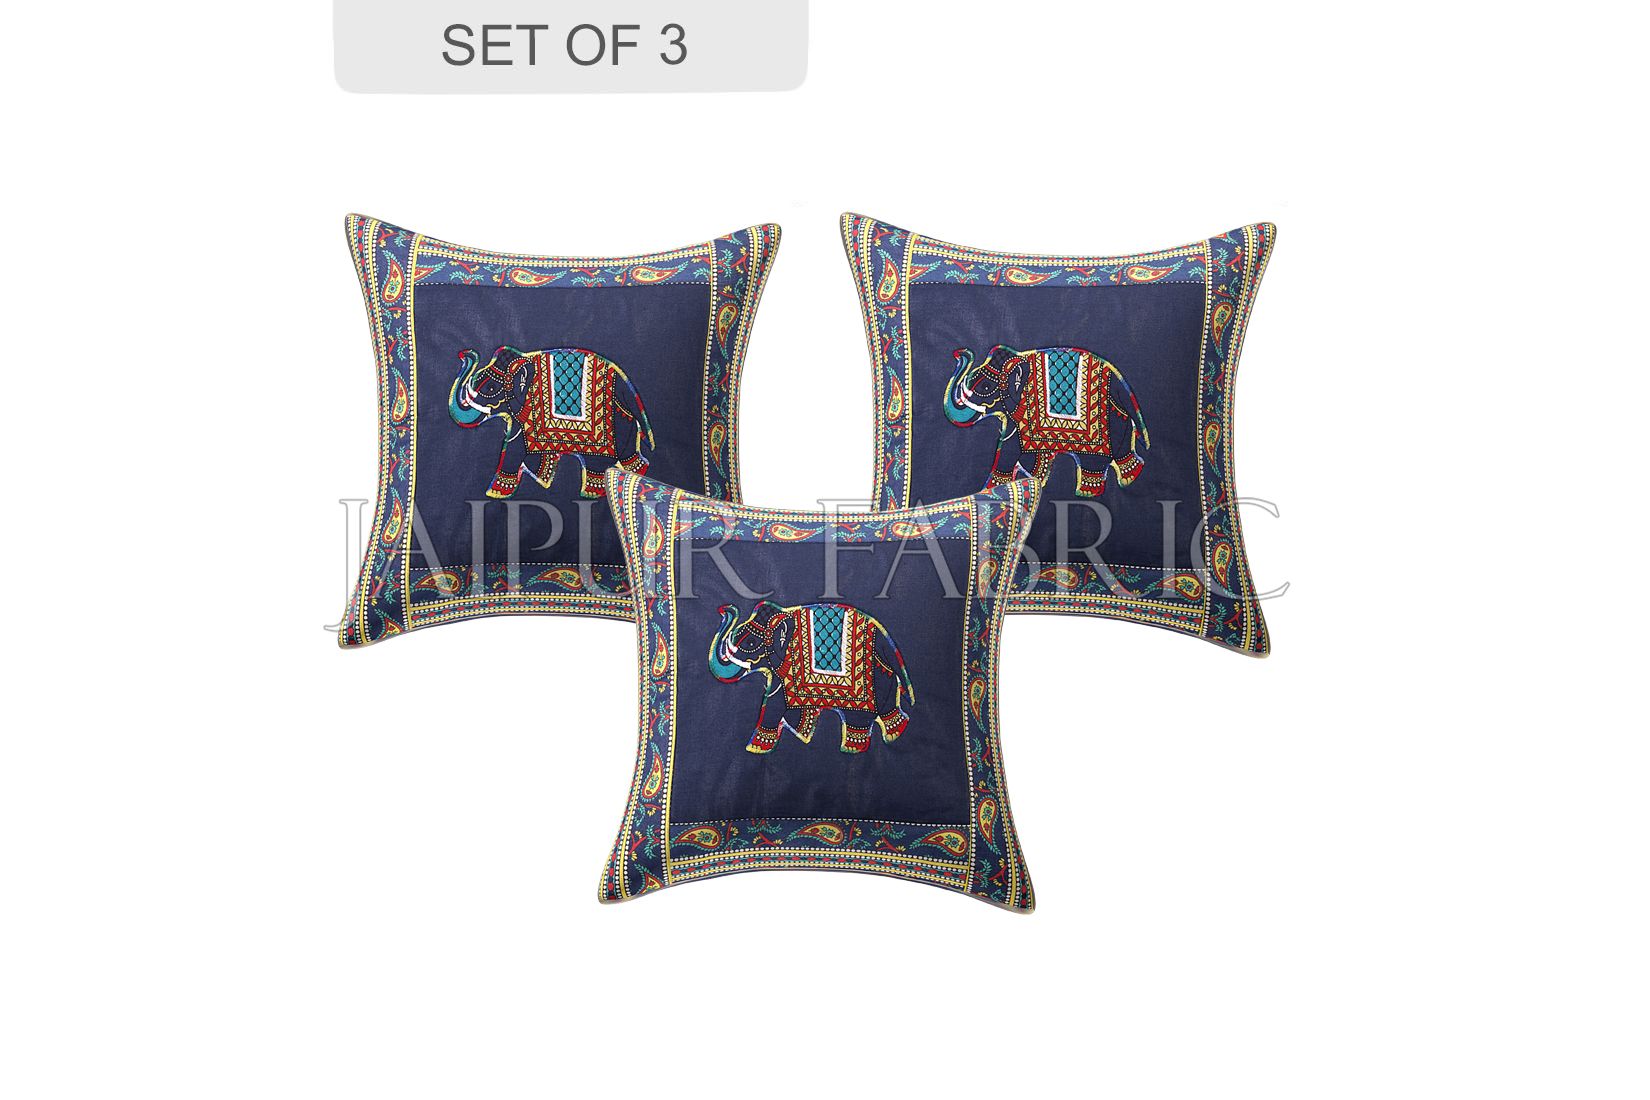 Blue Elephant Design Patchwork & Applique Cushion Cover